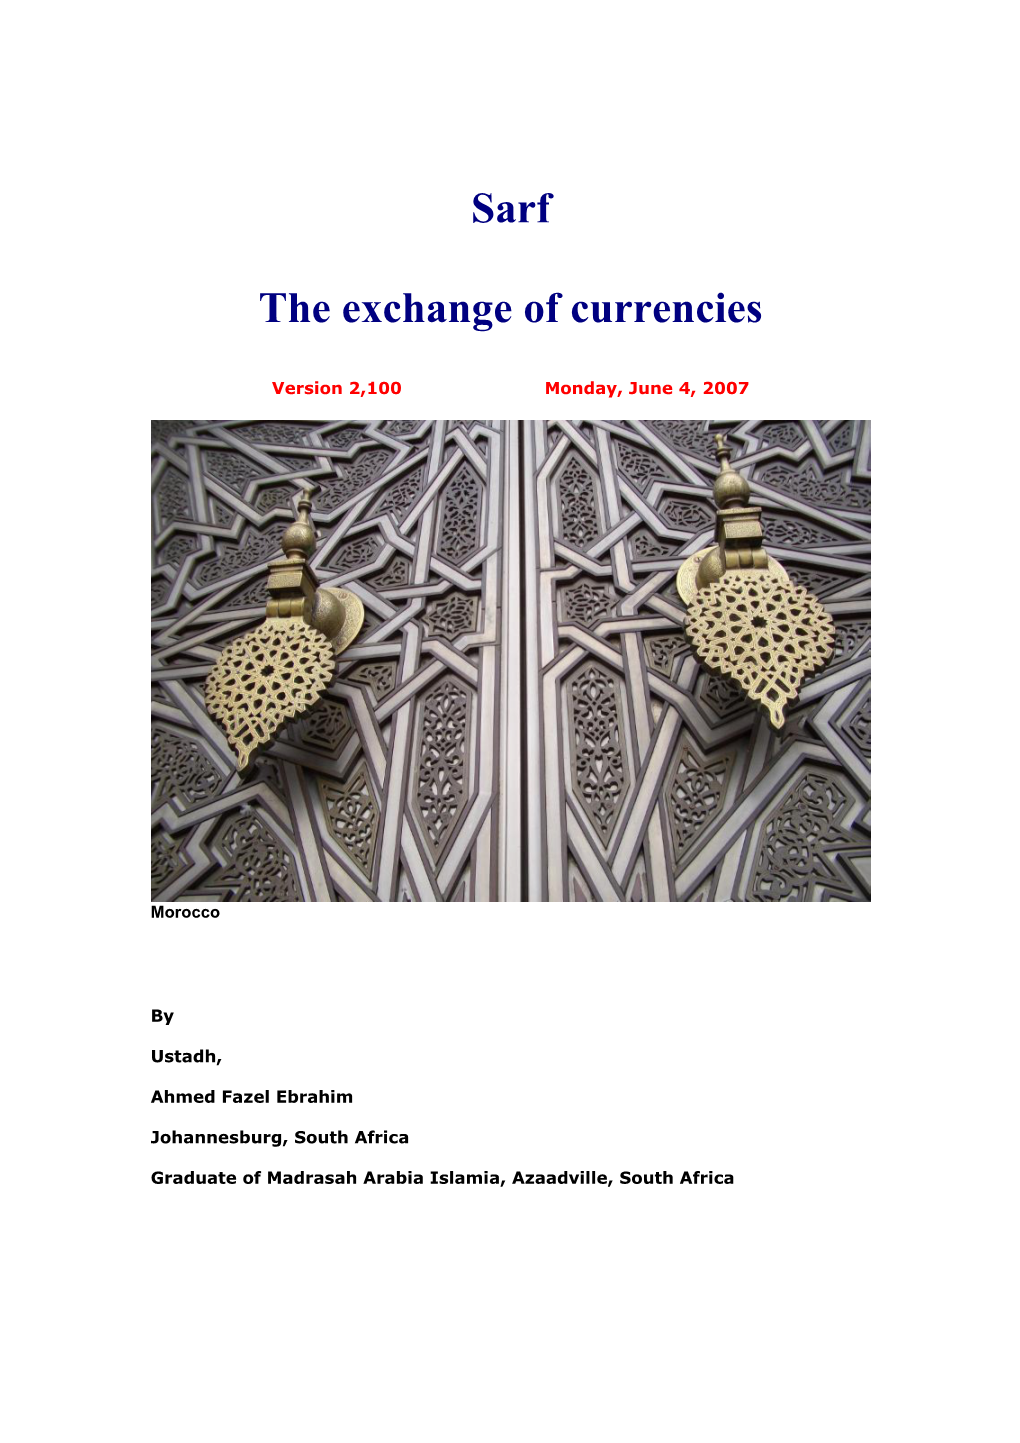 Sarf the Exchange of Currencies